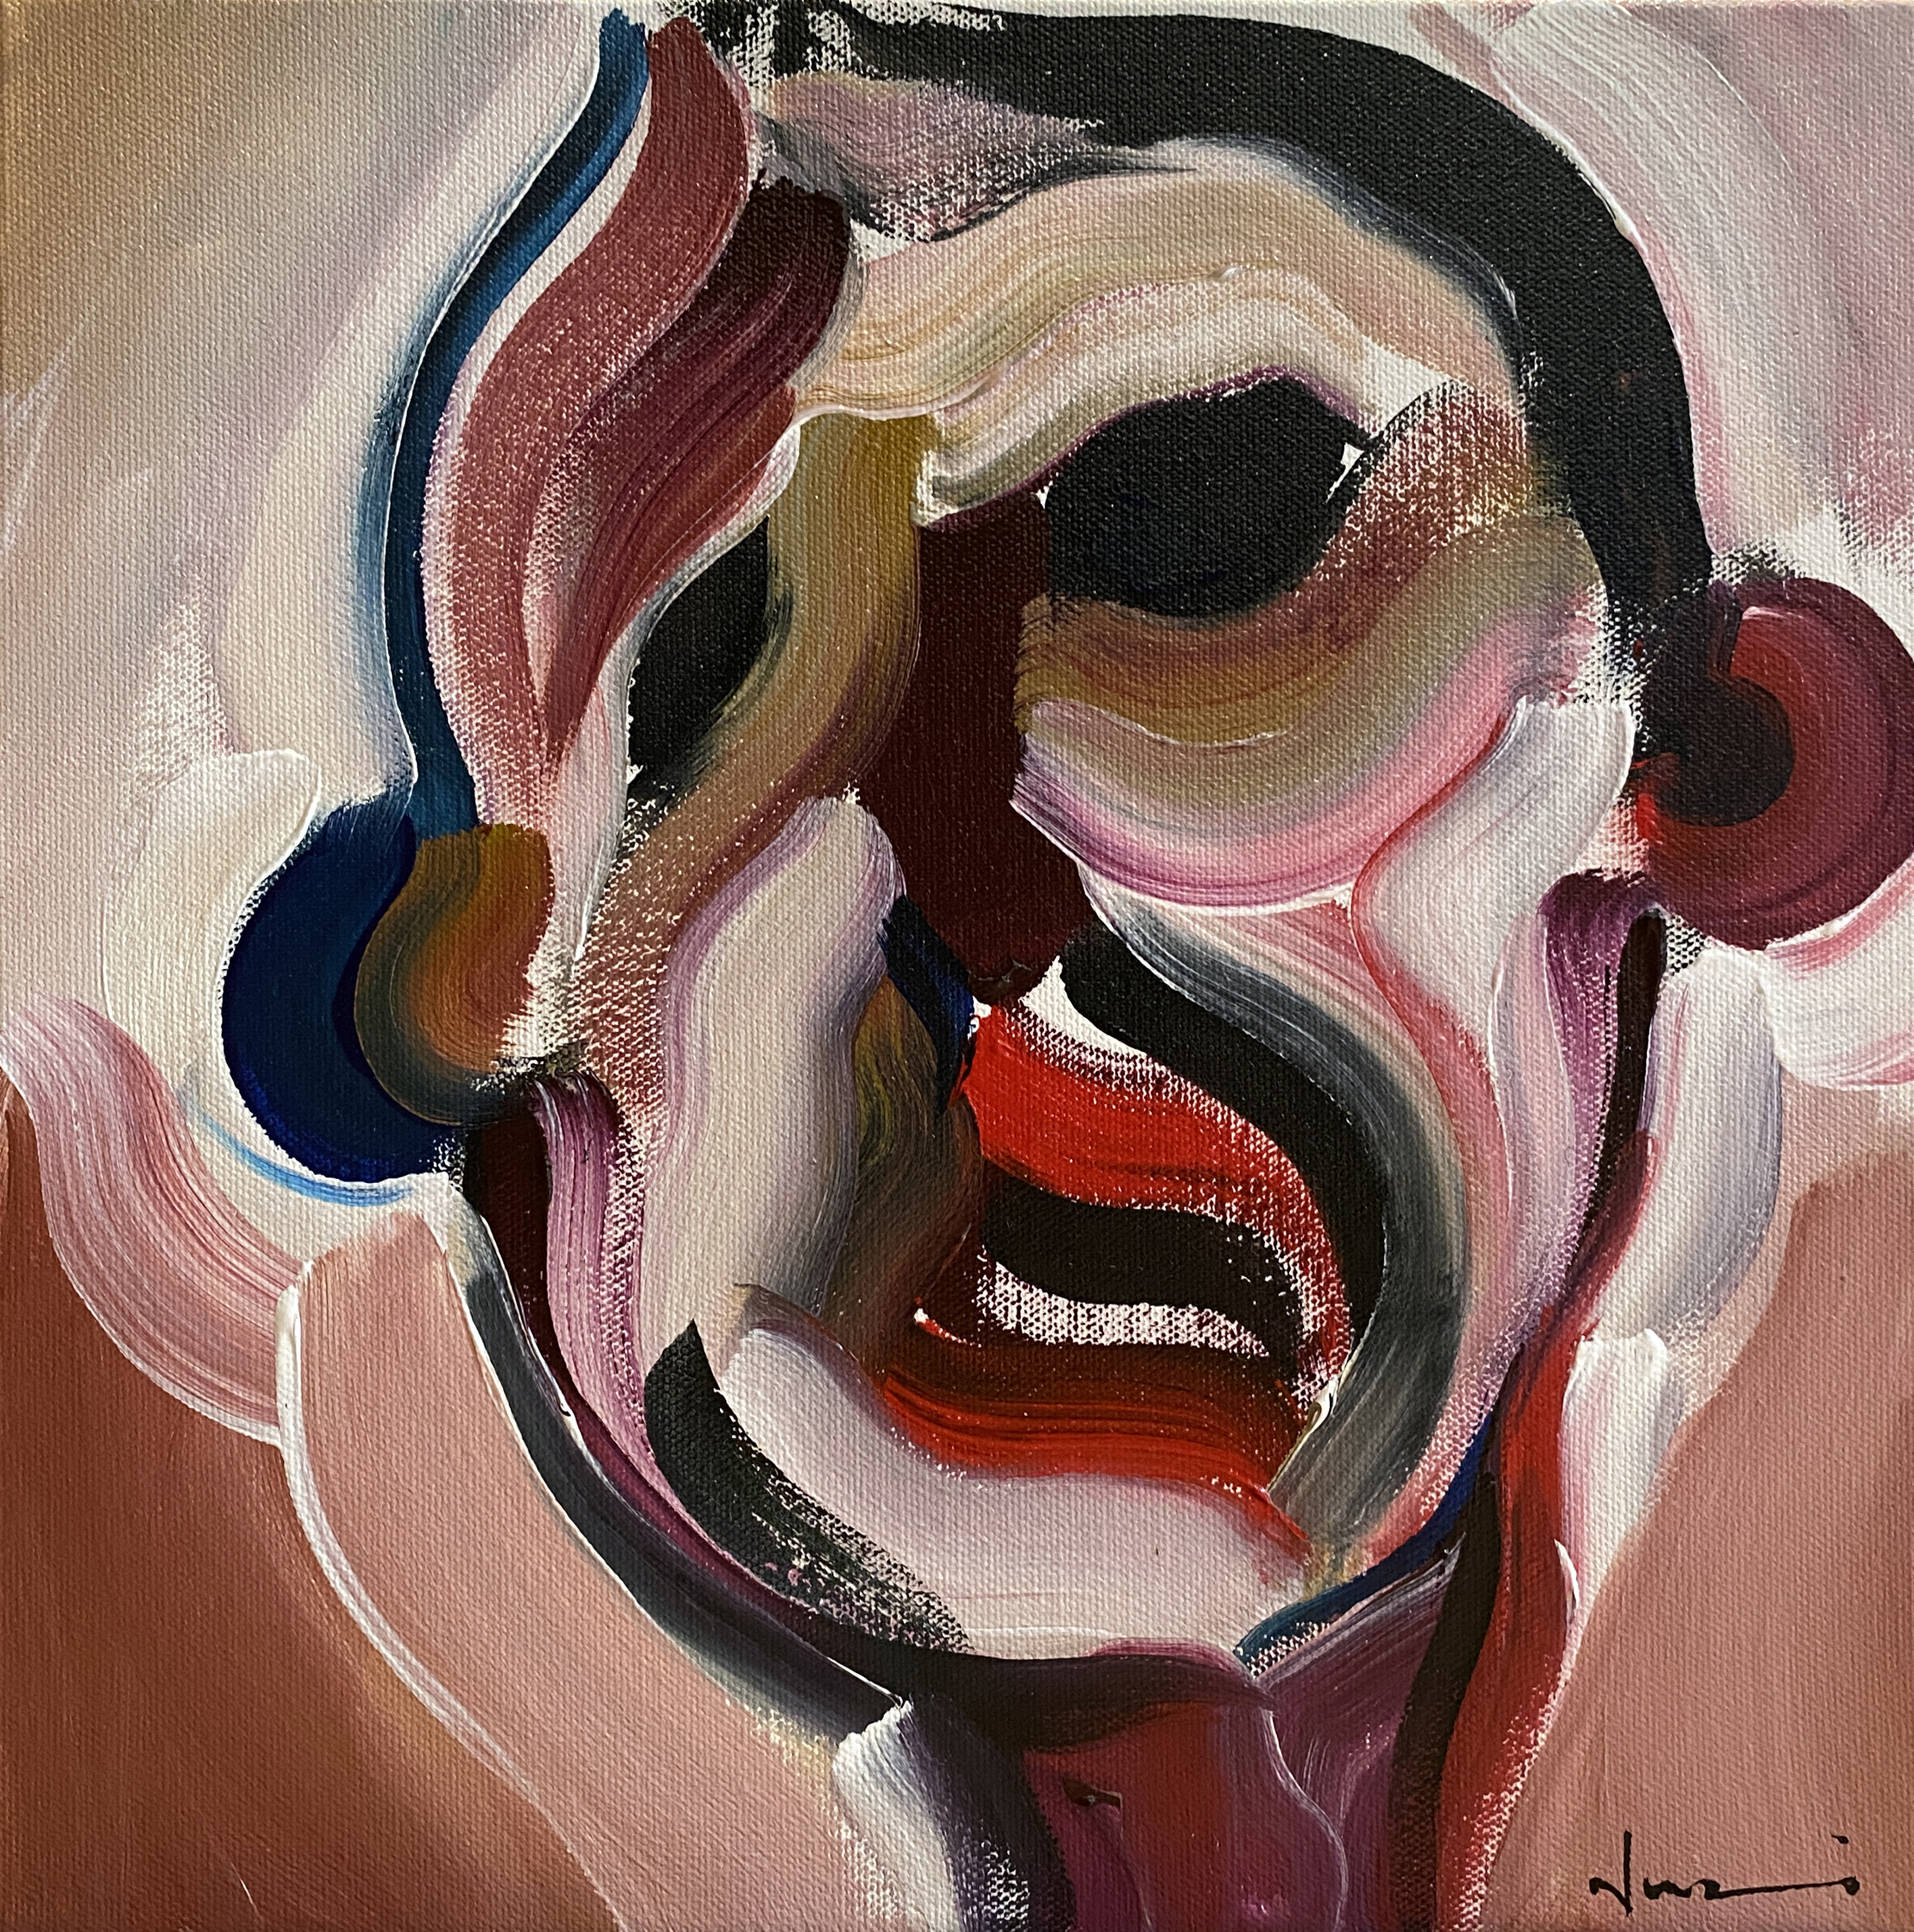 Man in anguish by Nunzio Miano | Lethbridge 20000 2021 Finalists | Lethbridge Gallery